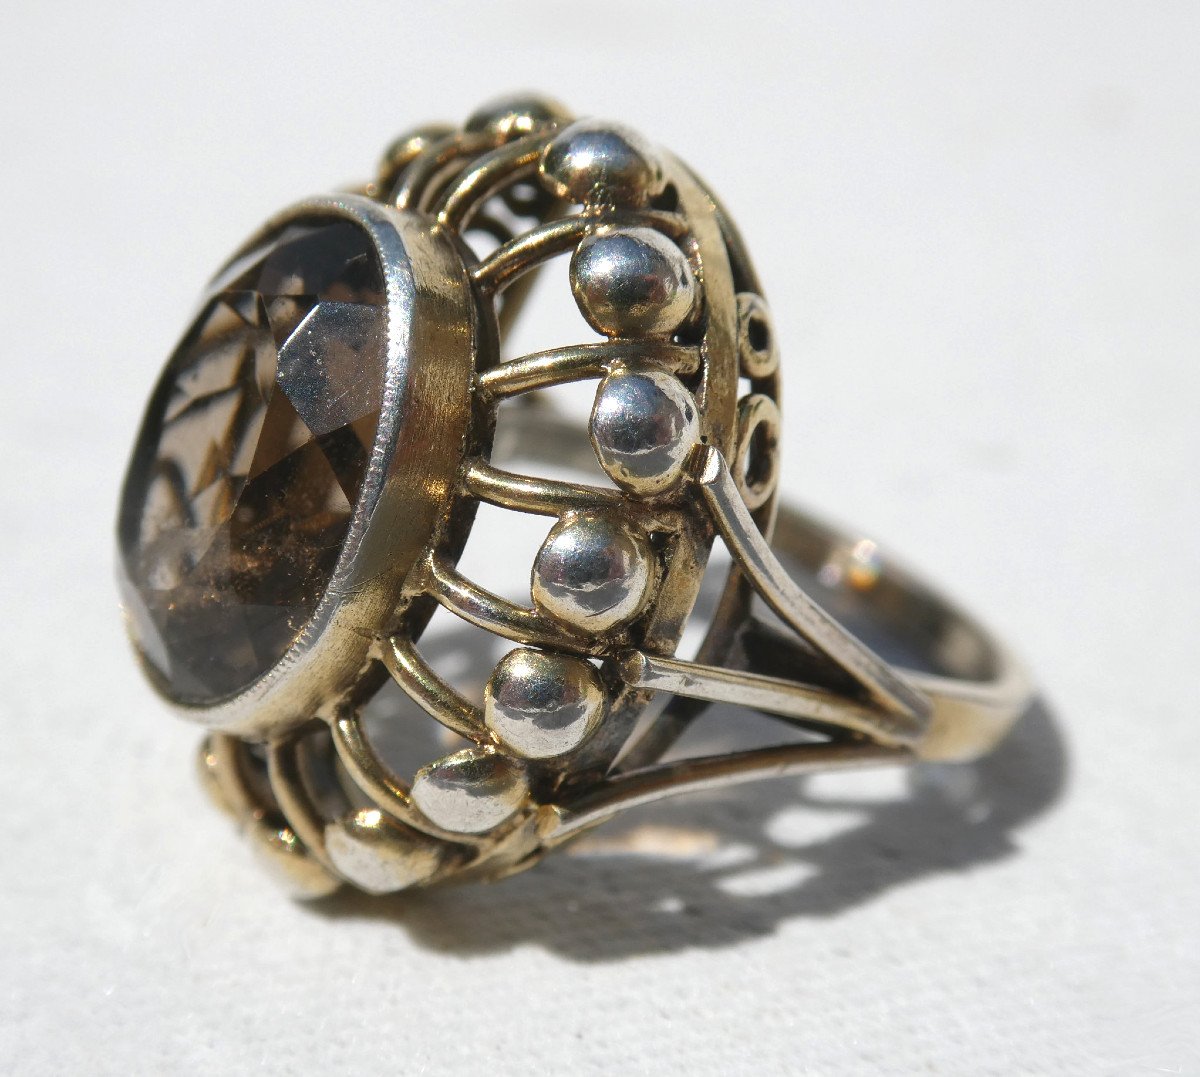 Art Deco Period Ring 1930, Antique Jewelry, Silver Vermeil Setting, Smoky Quartz